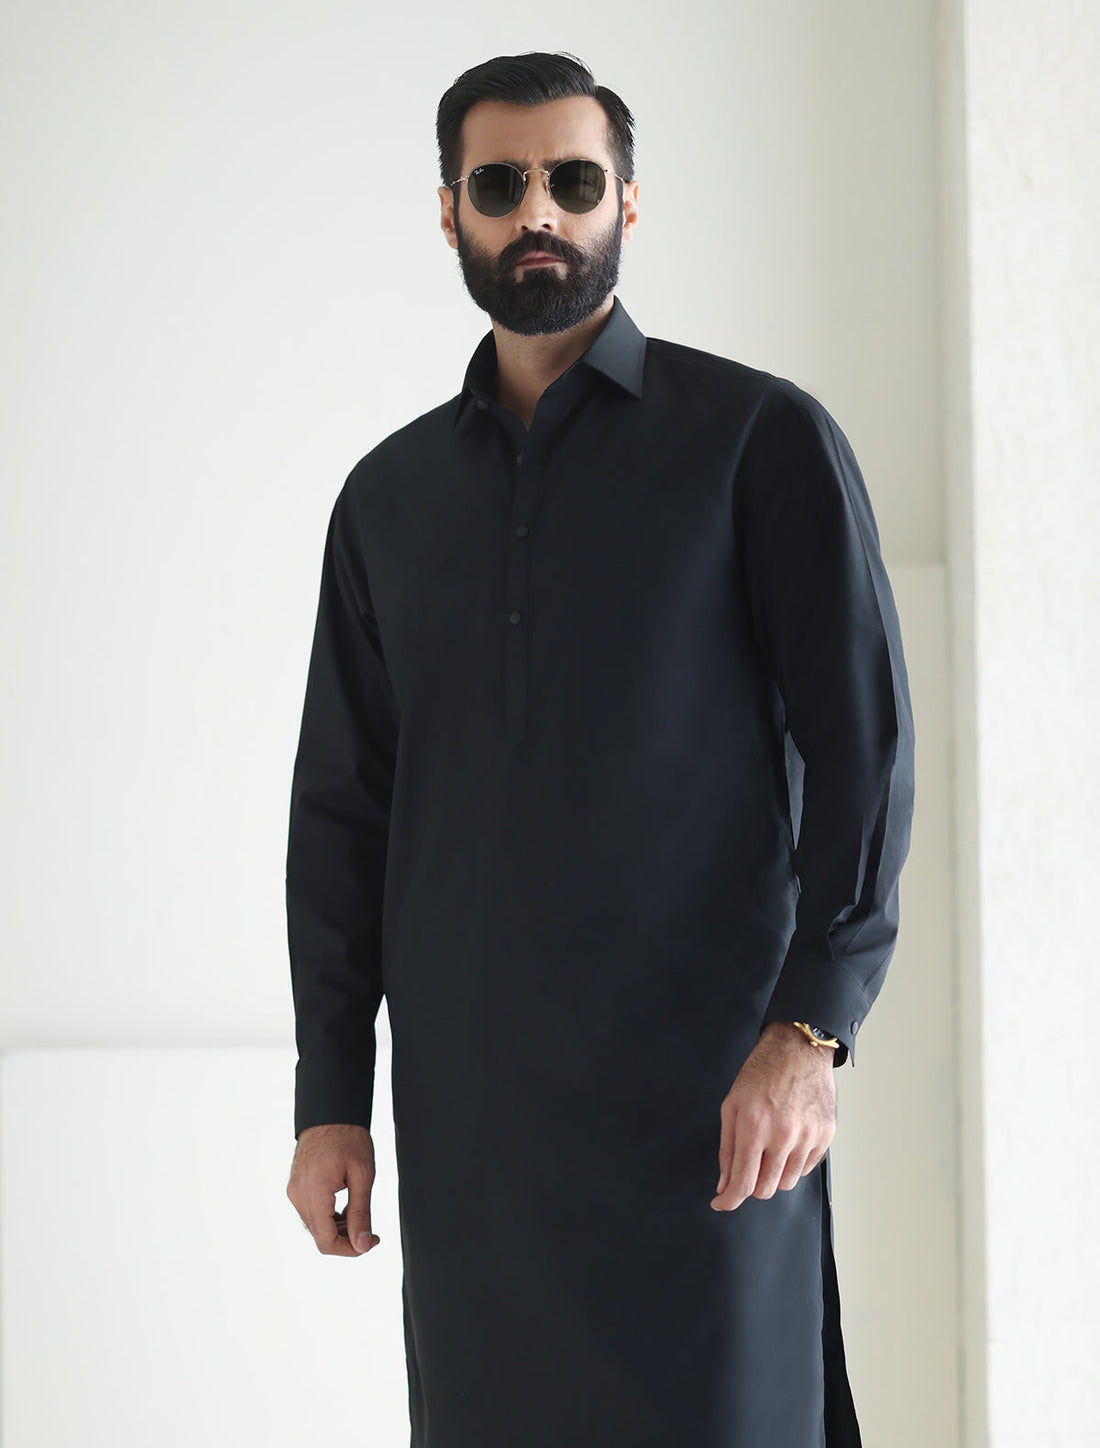 Pakistani Menswear | Ismail Farid - BLACK KAMEEZ SHALWAR - Khanumjan  Pakistani Clothes and Designer Dresses in UK, USA 